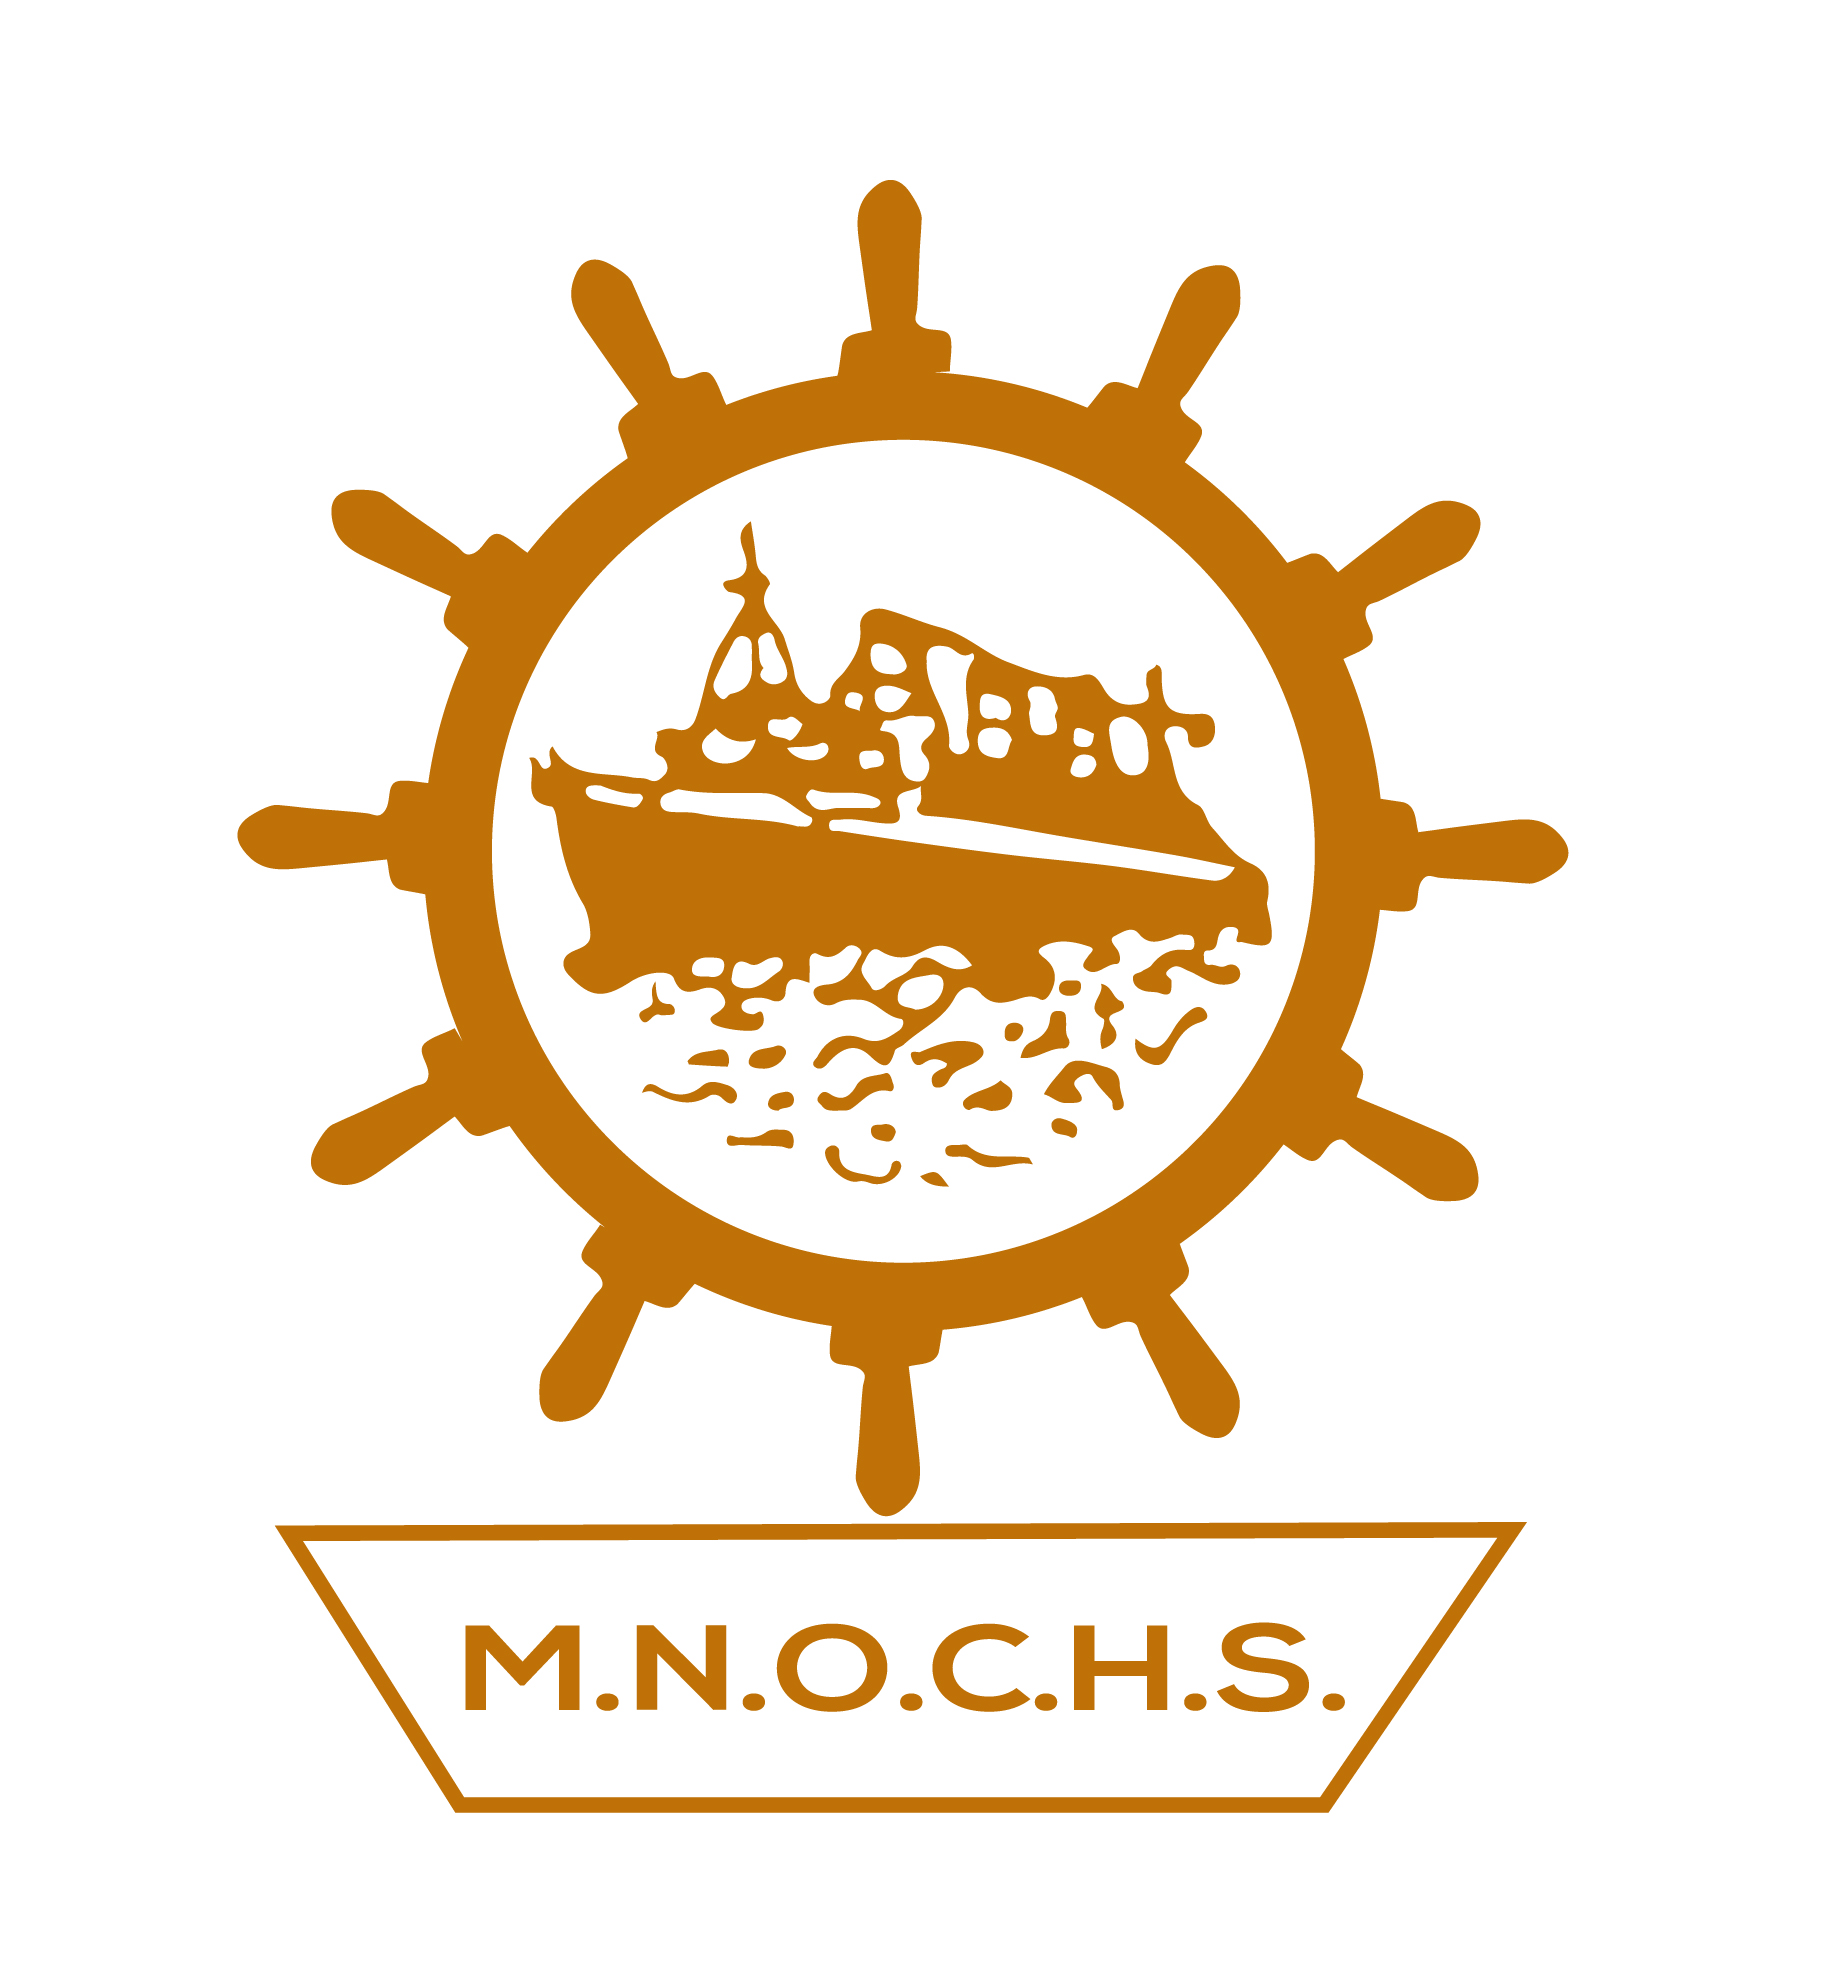 Merchant Navy Society